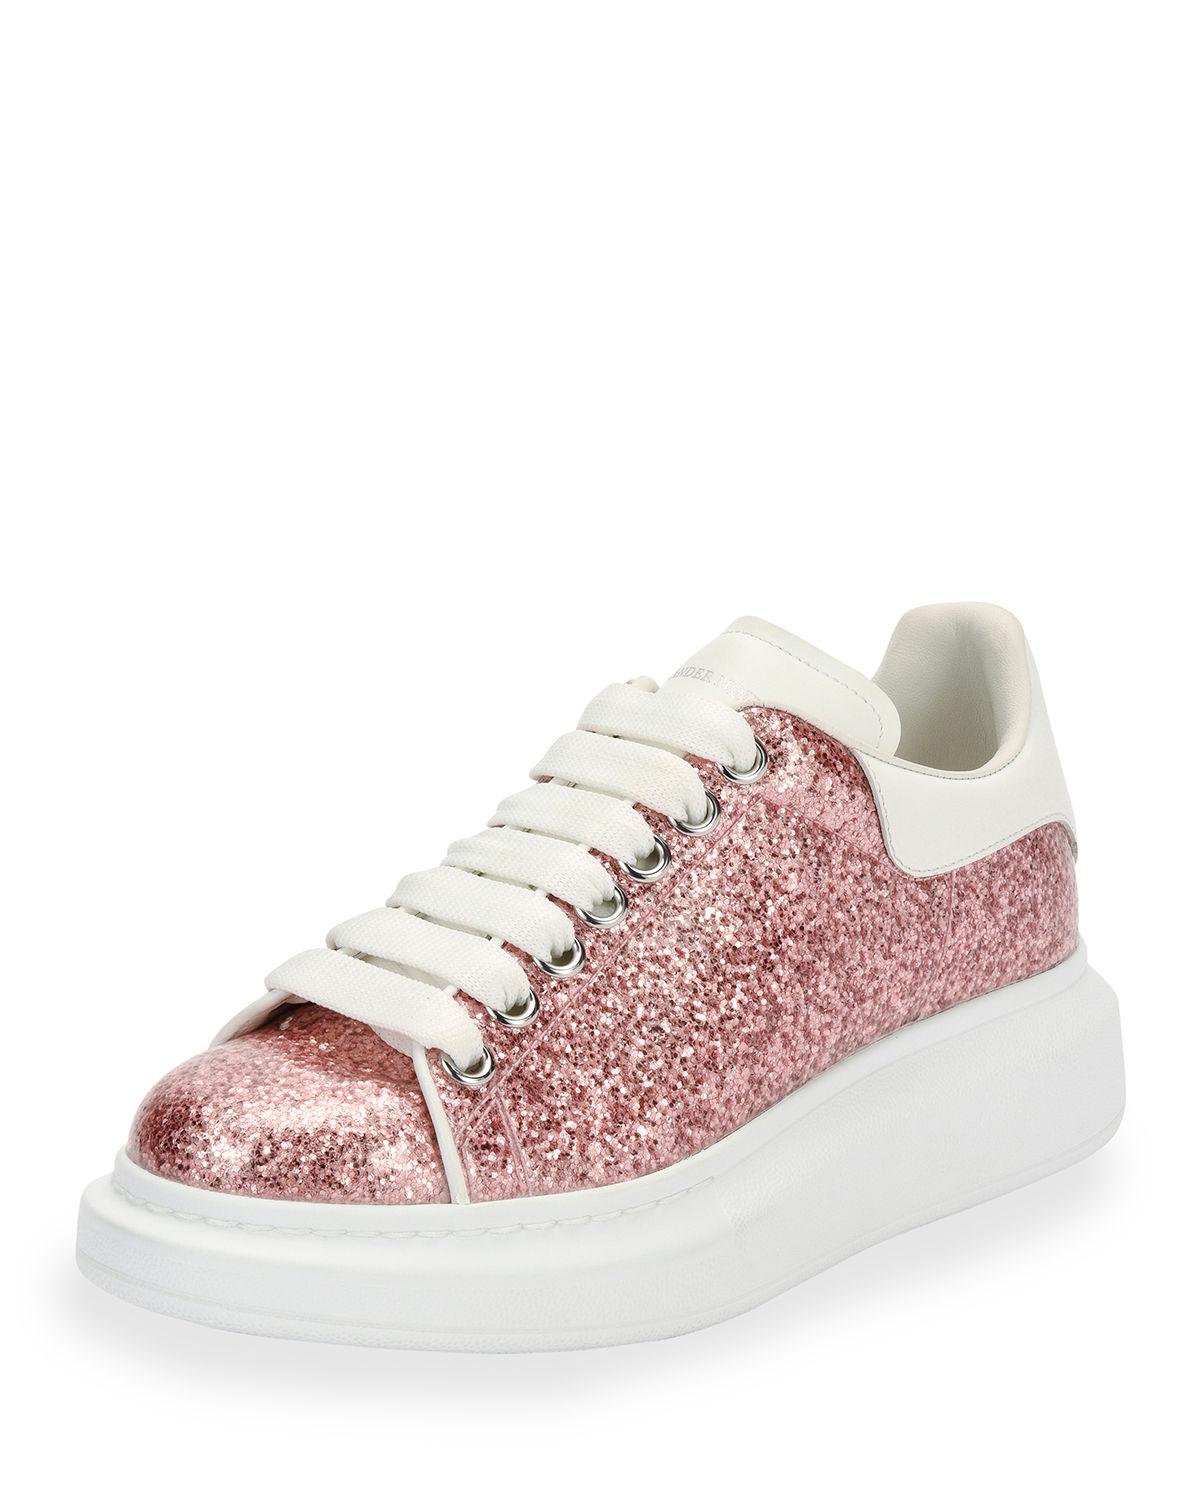 Alexander McQueen Rubber Glitter Lace-up Platform Sneakers in Pink ...